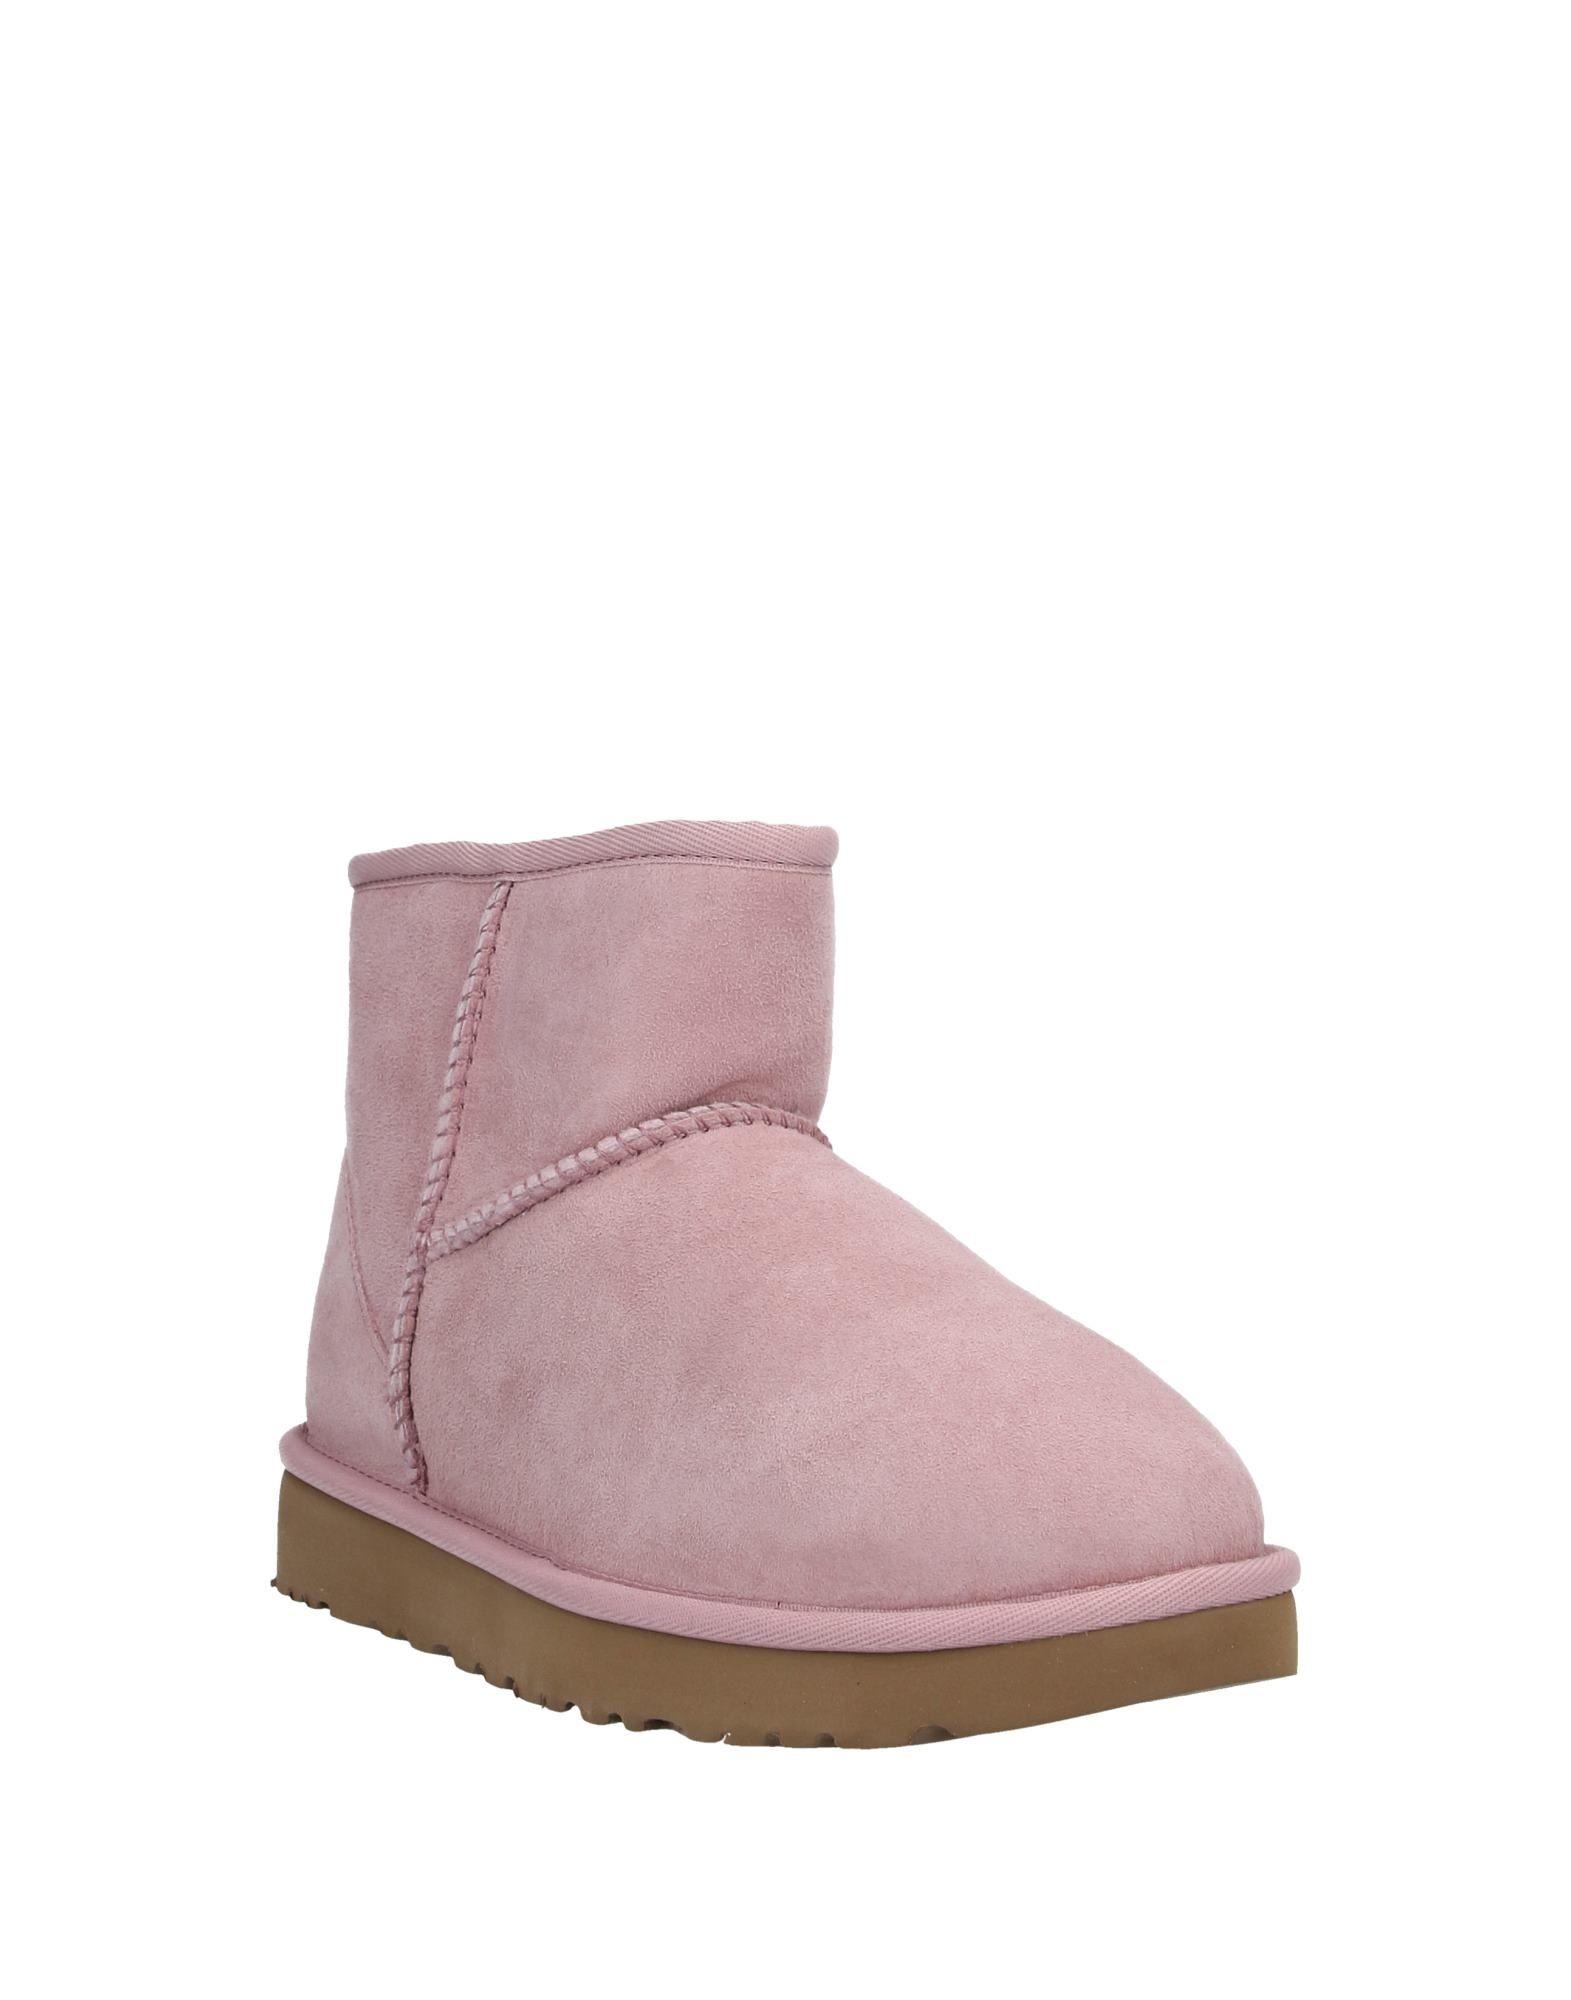 pink ugg boots uk